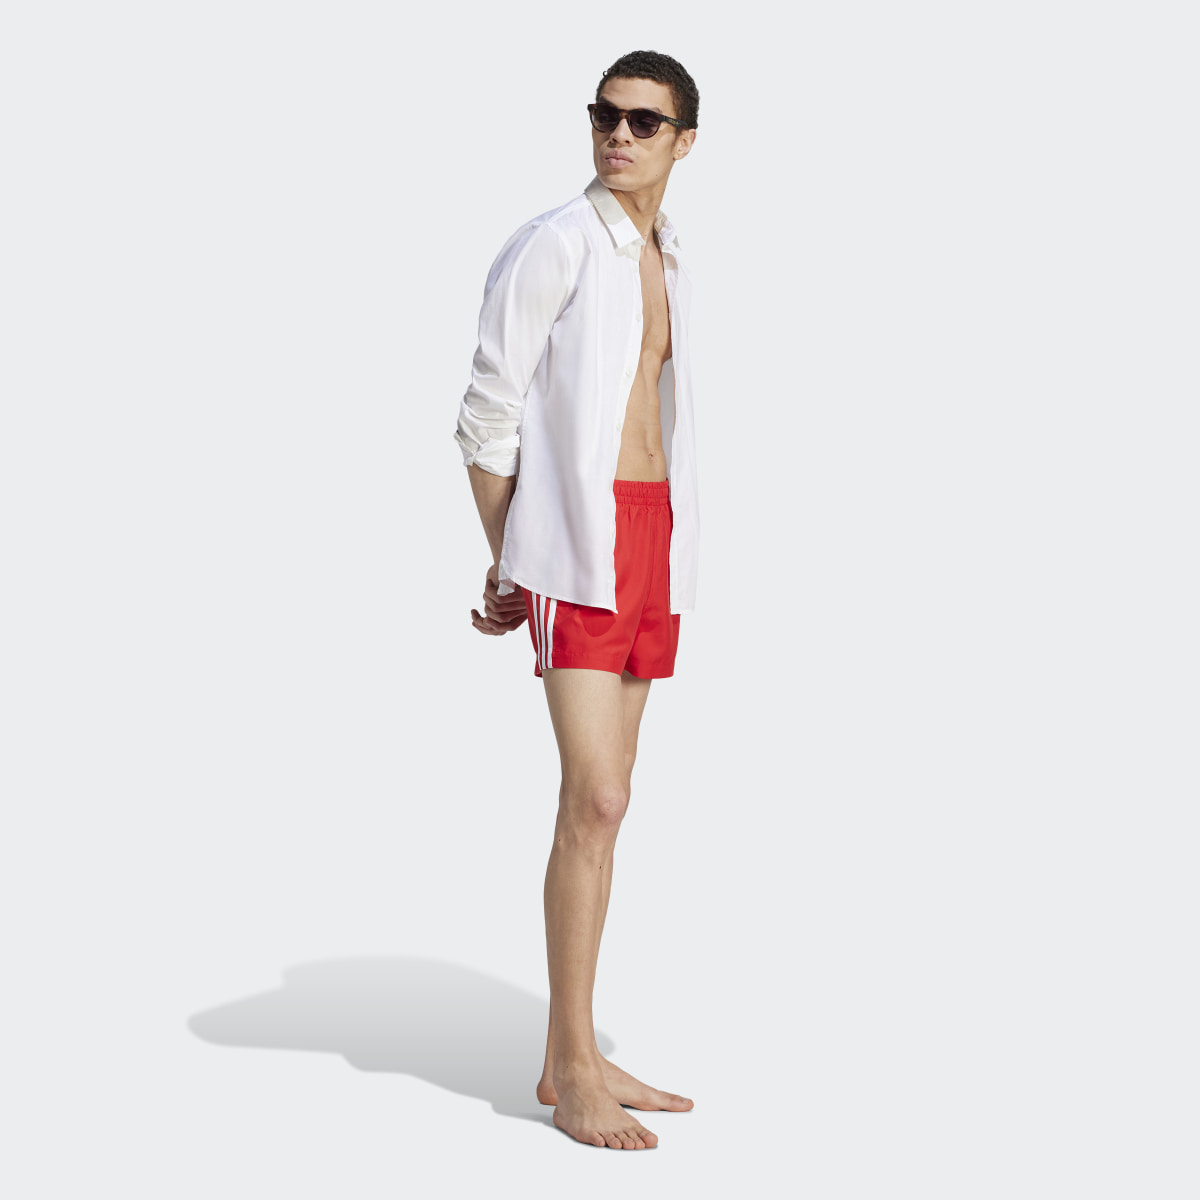 Adidas Adicolor 3-Stripes Swim Shorts. 4